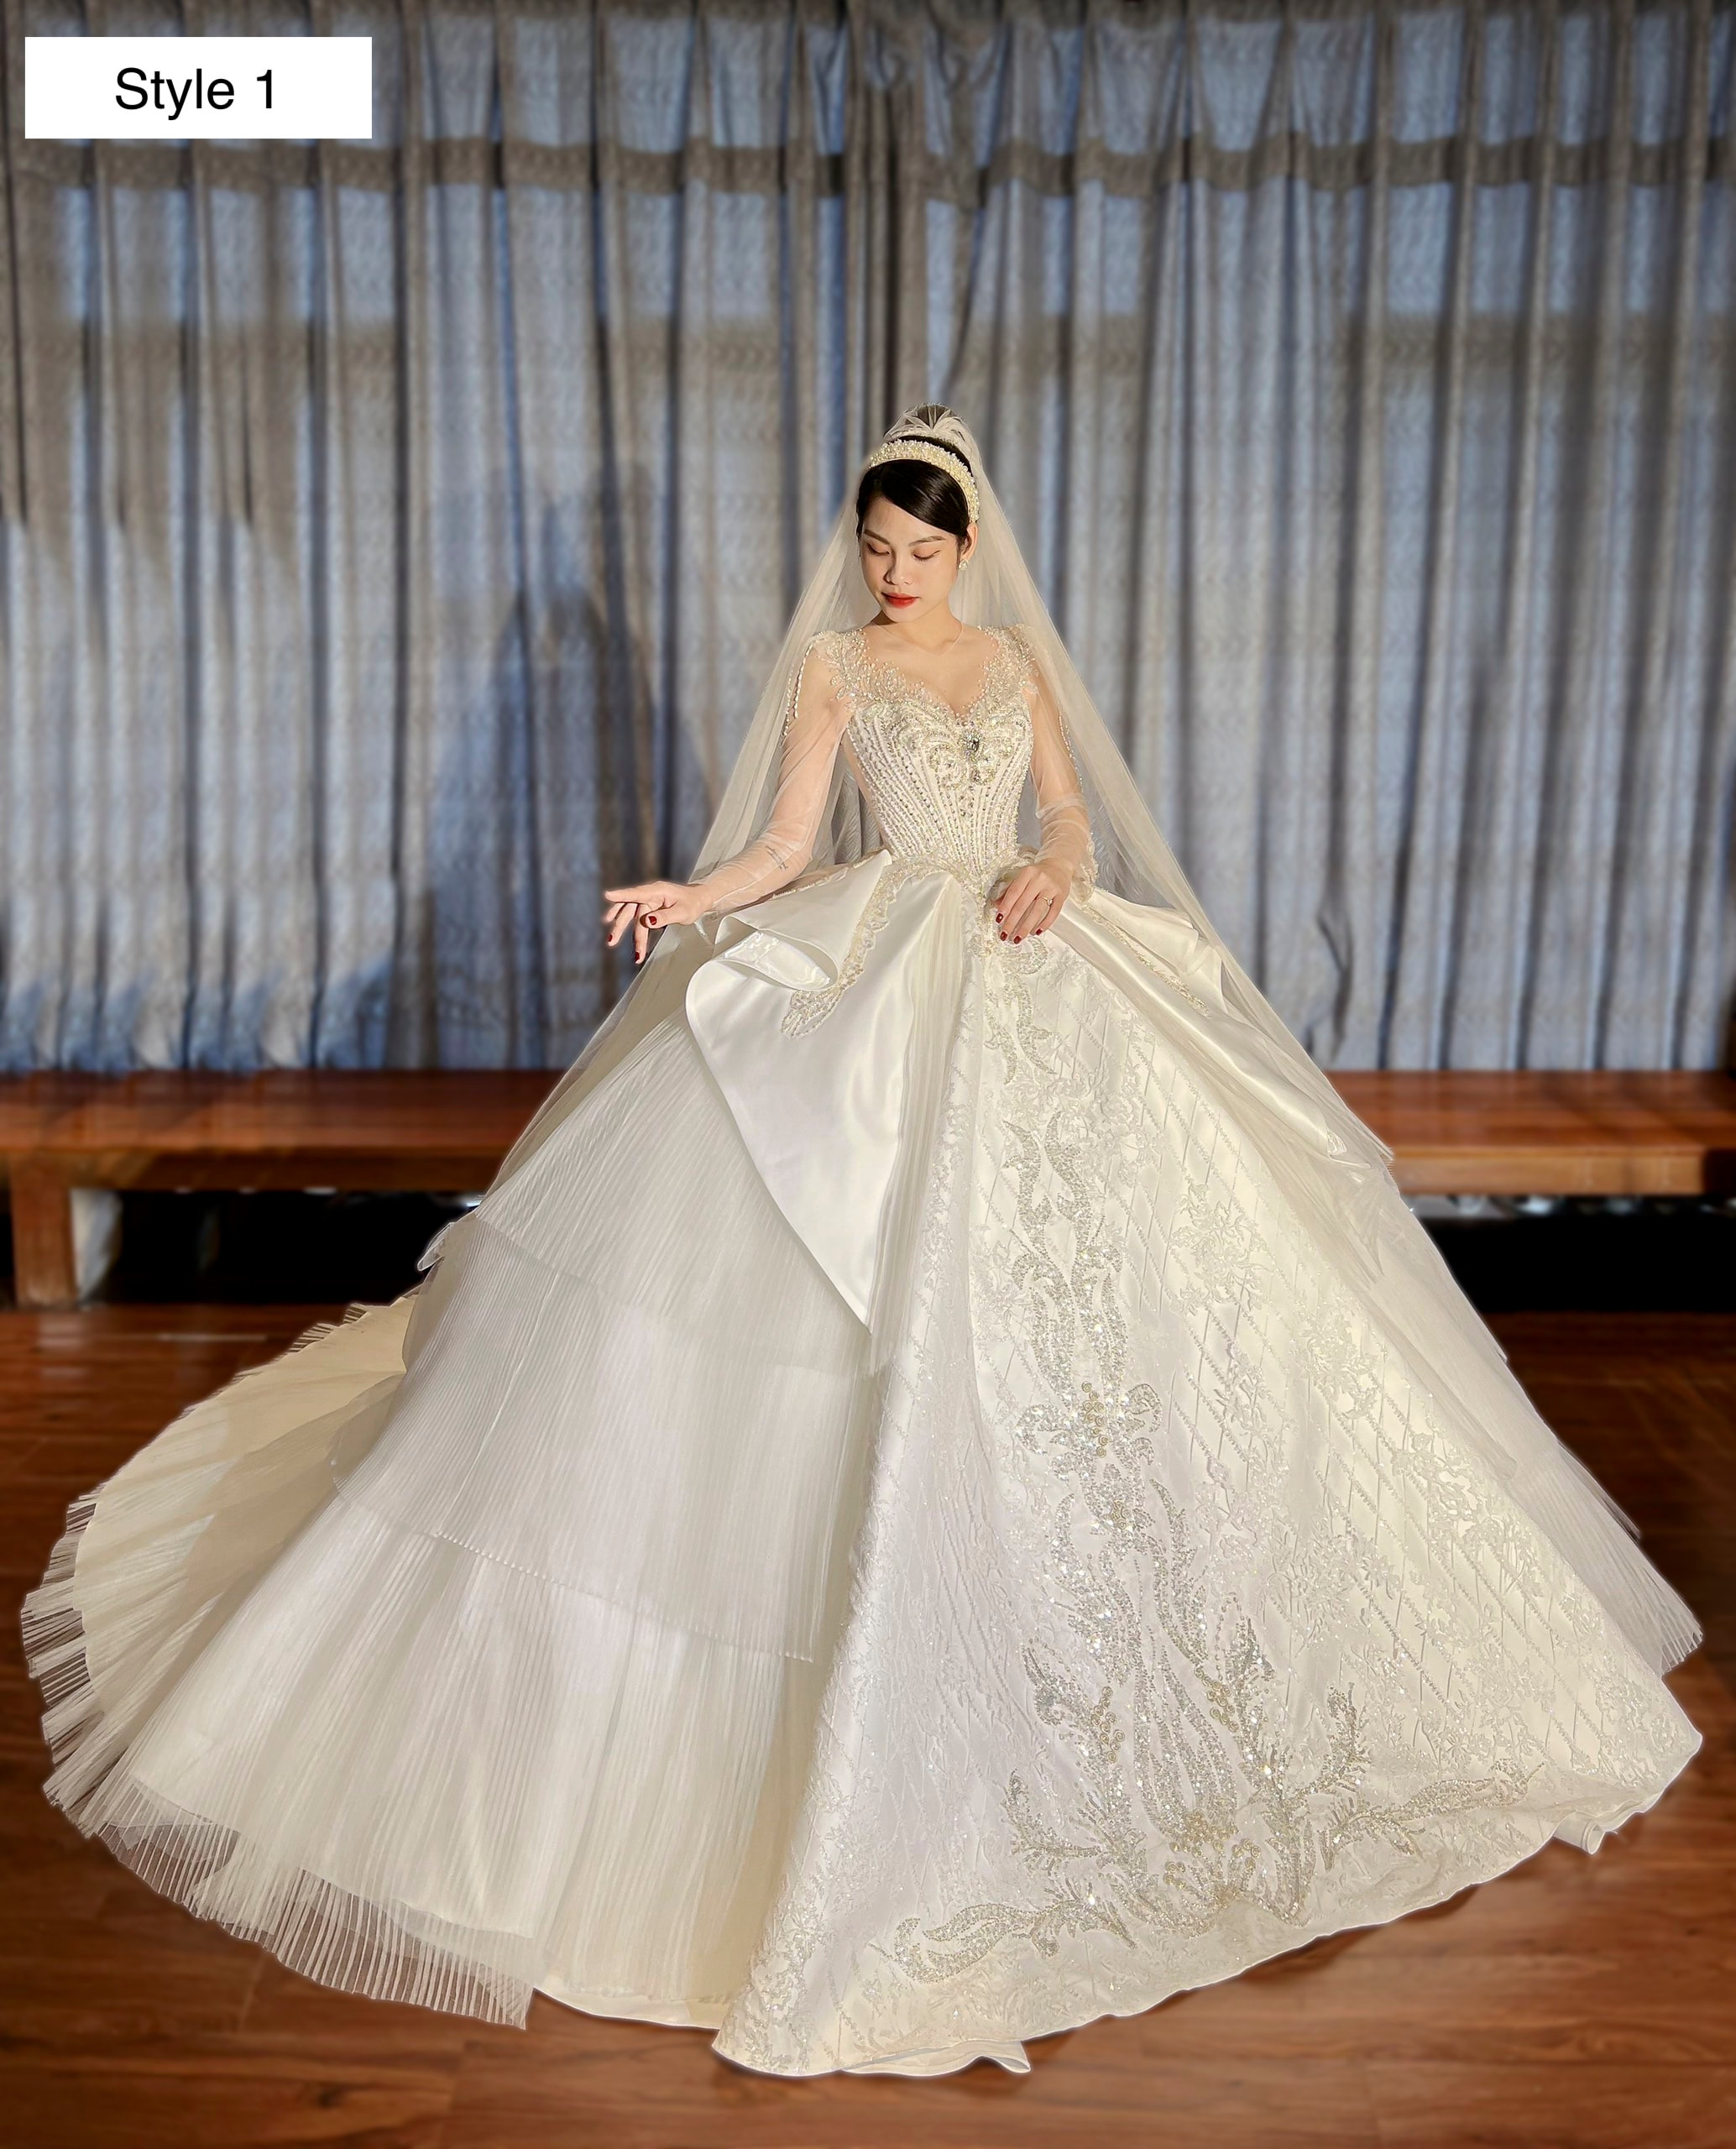 Ballgown vs. Princess Wedding Dresses